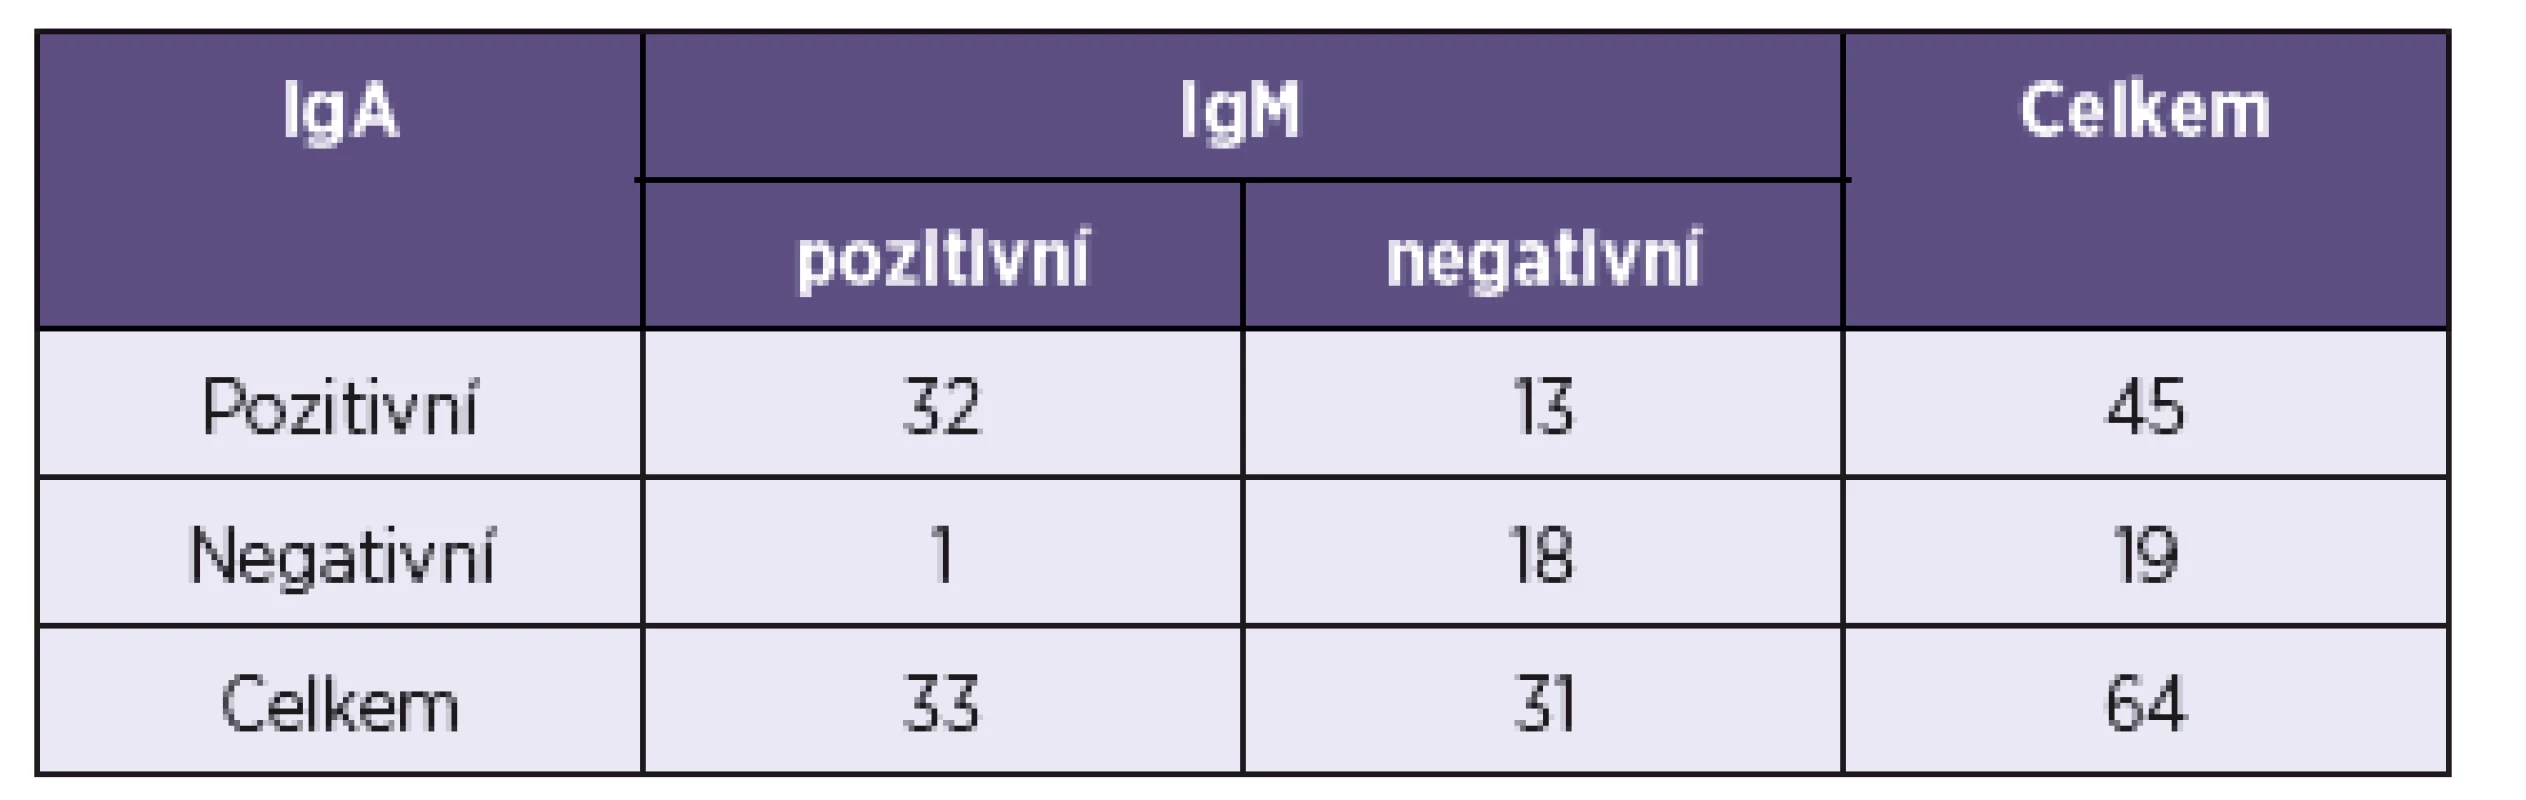 Srovnání metody na stanovení IgM a IgA protilátek pomocí McNemarova testu
Table 3. Comparison of the methods for the detection of IgM and IgA antibodies by McNemara’s test